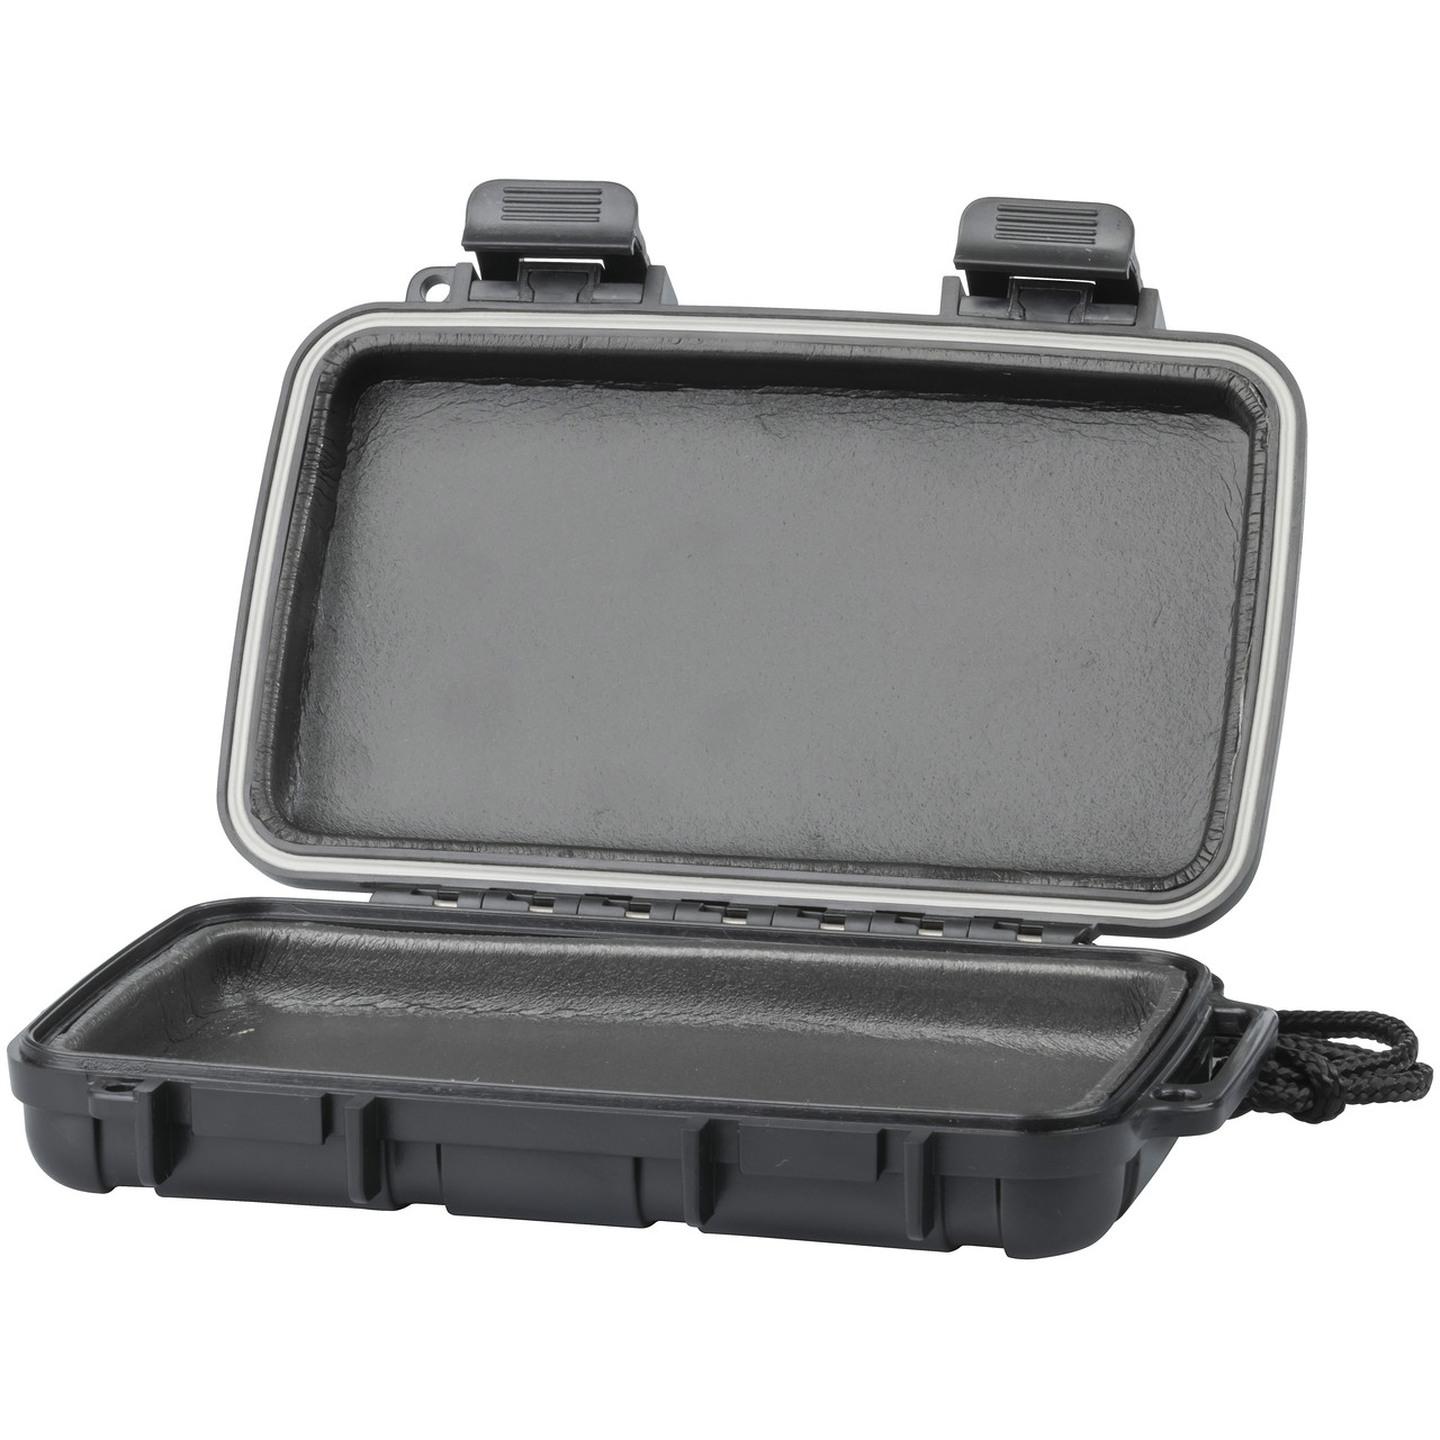 Black Waterproof ABS Plastic Case - 182 x 120 x 42mm